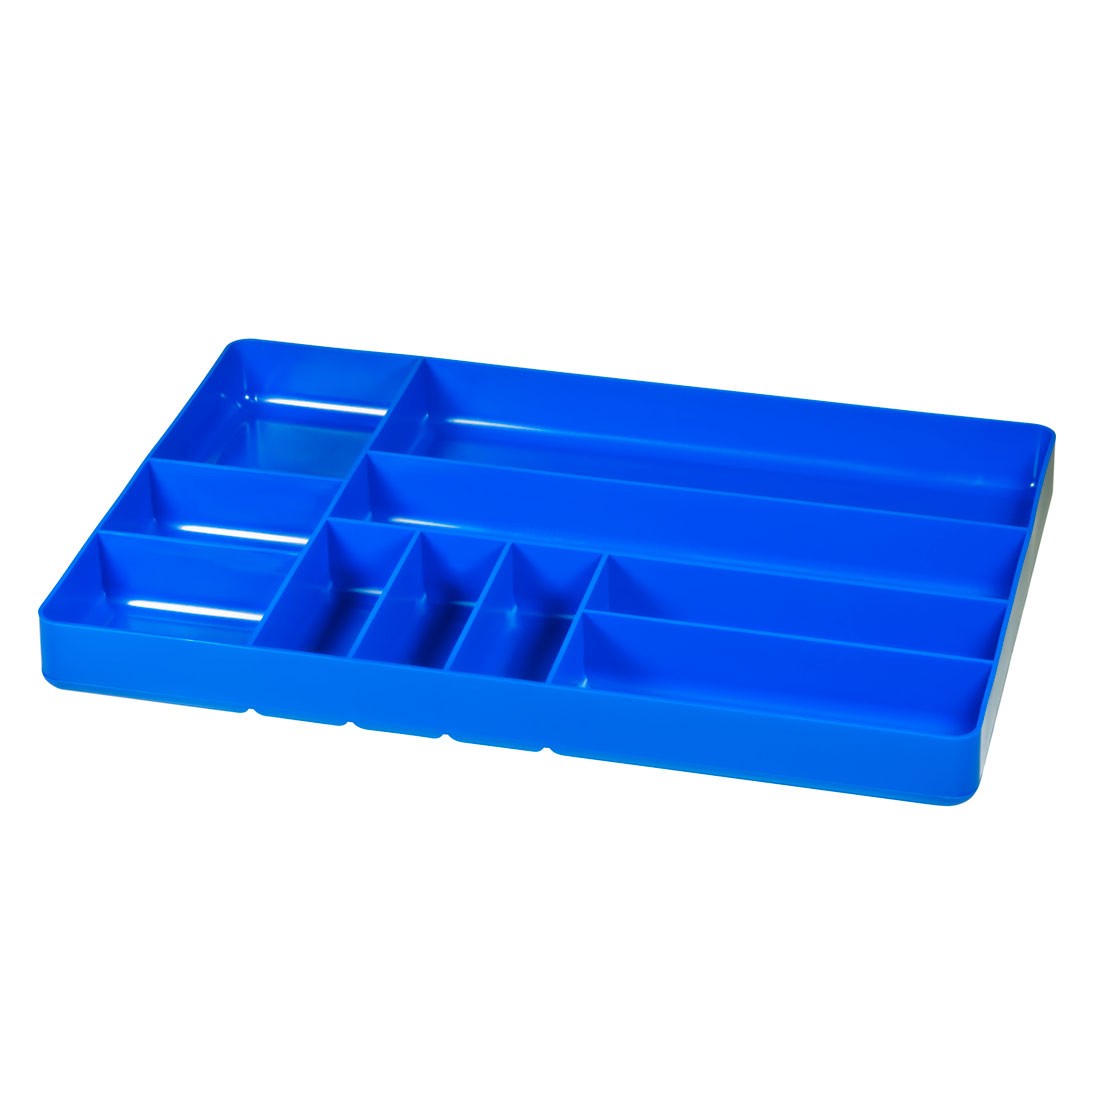 Ernst Manufacturing 5012 11 x 16 10 Compartment Organizer Tray - Blue